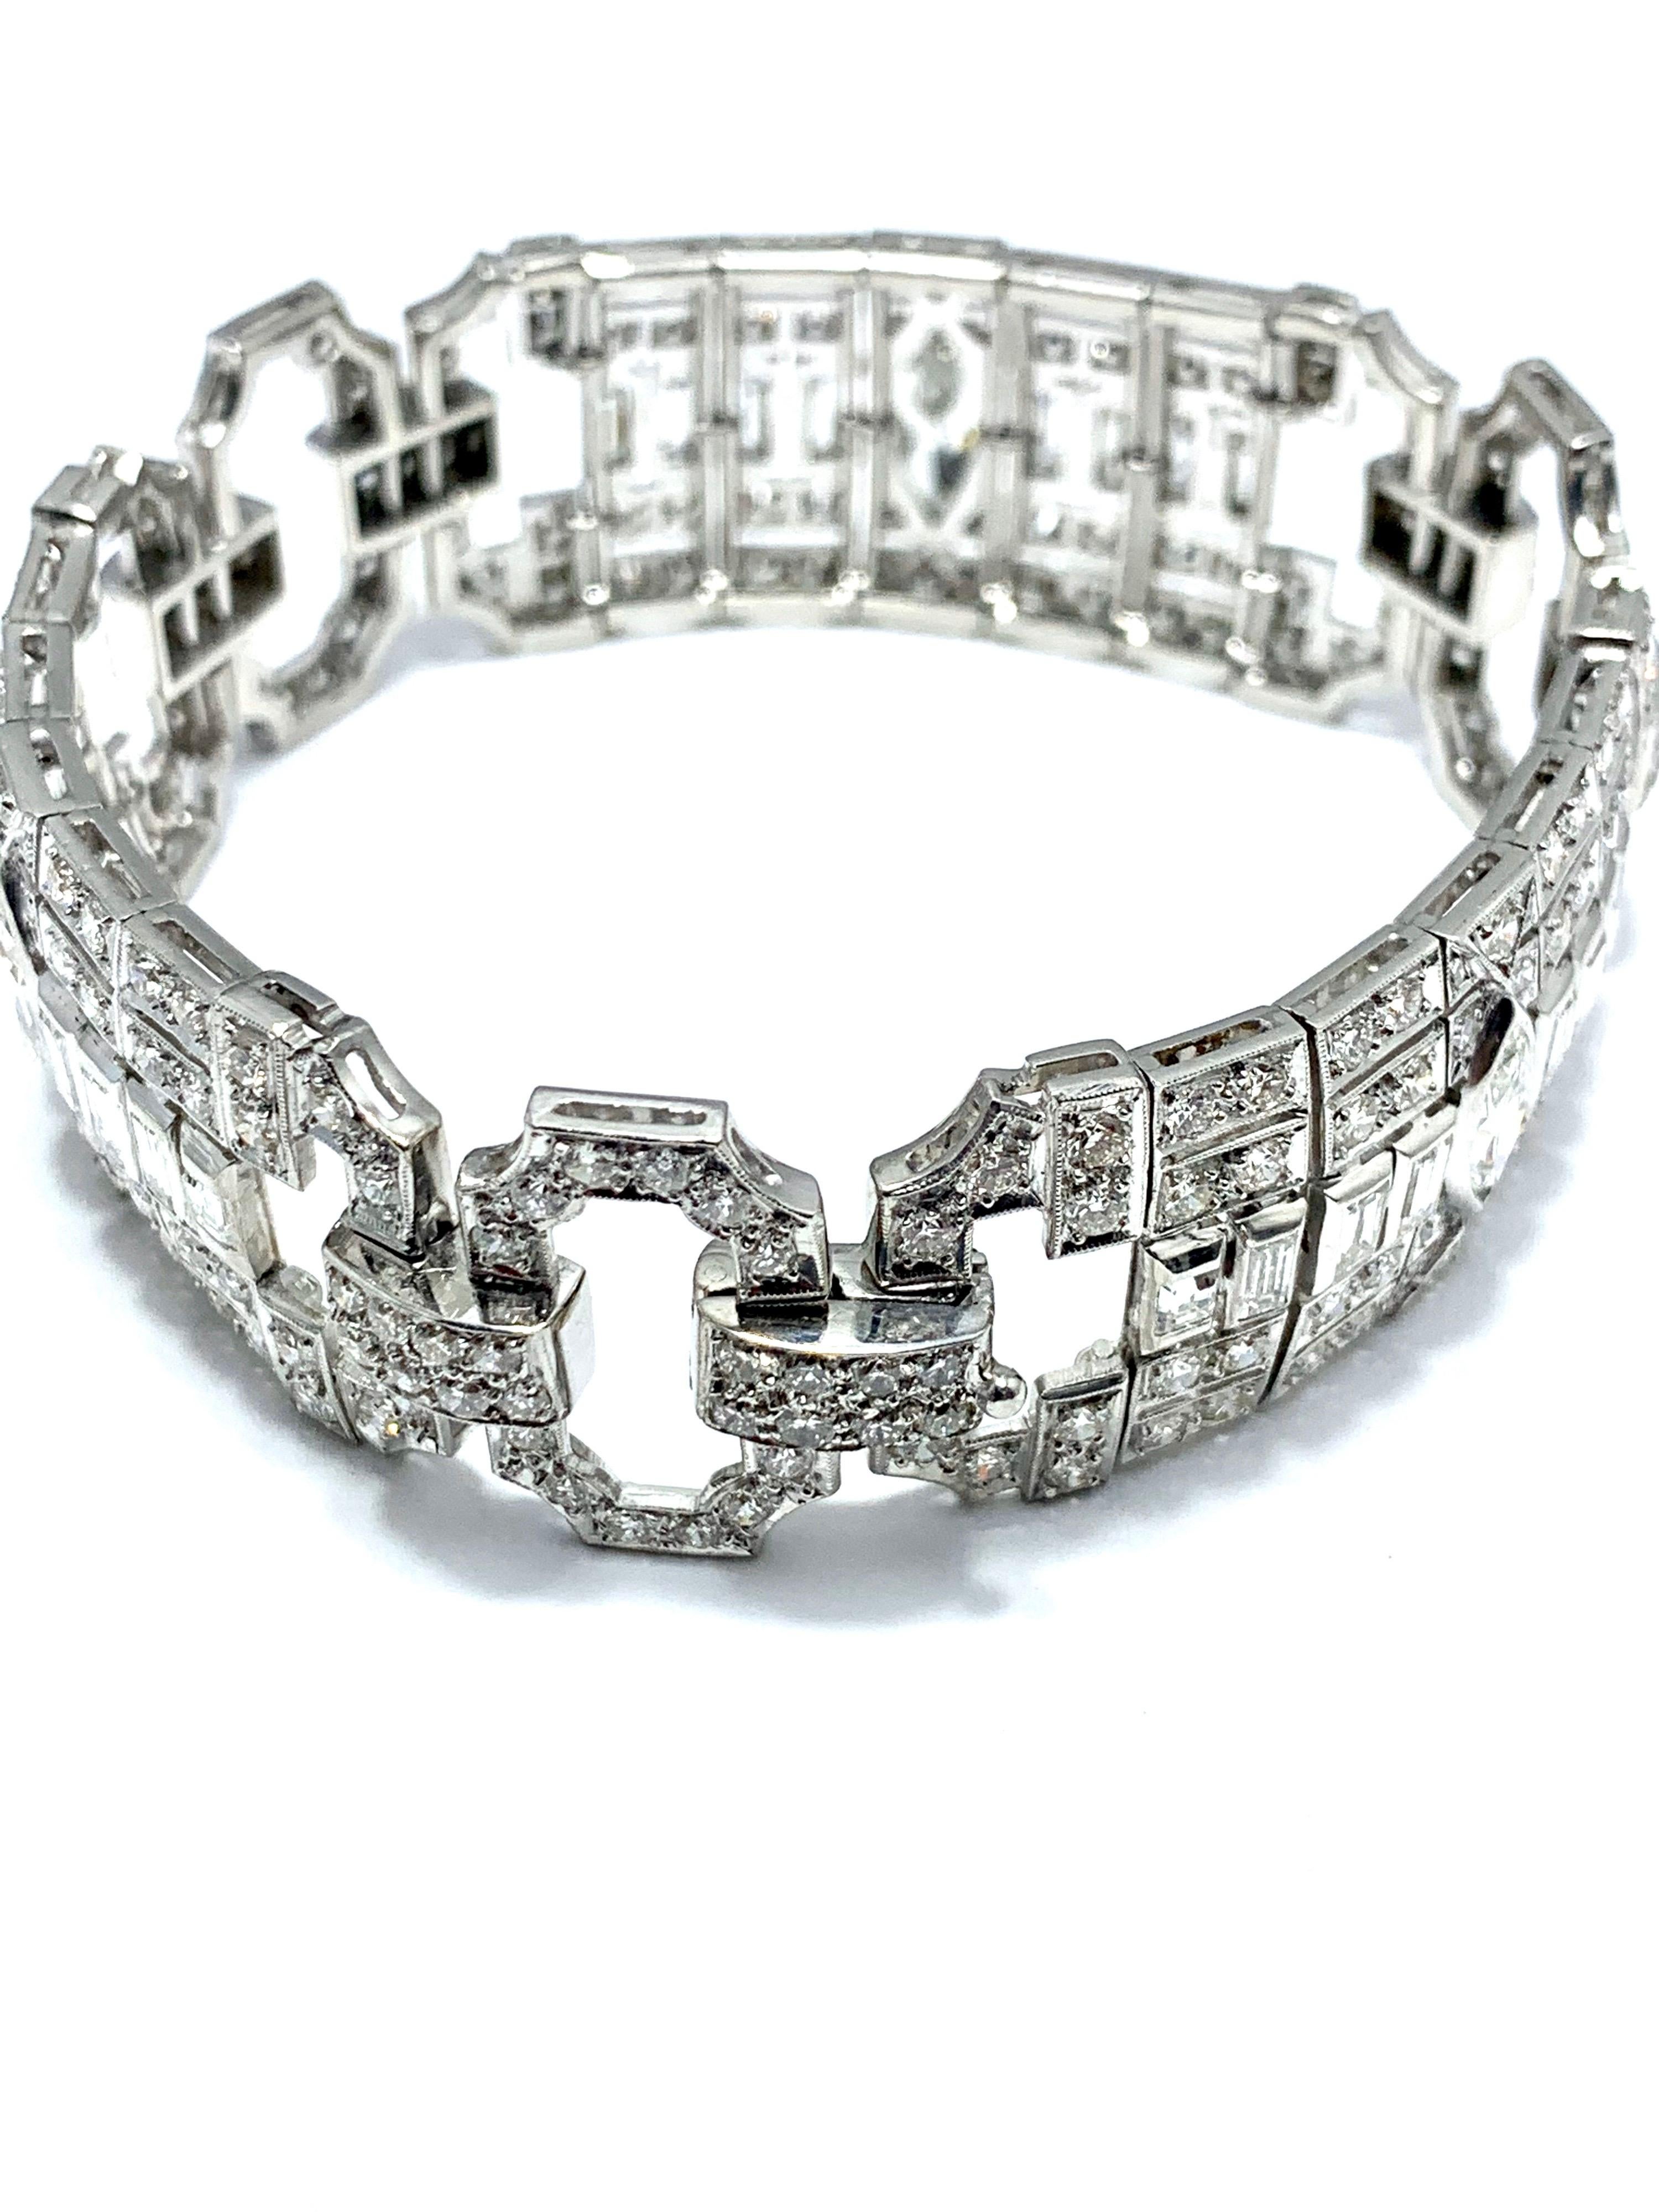 10.25 Carat Art Deco Style Diamond and Platinum Bracelet 1